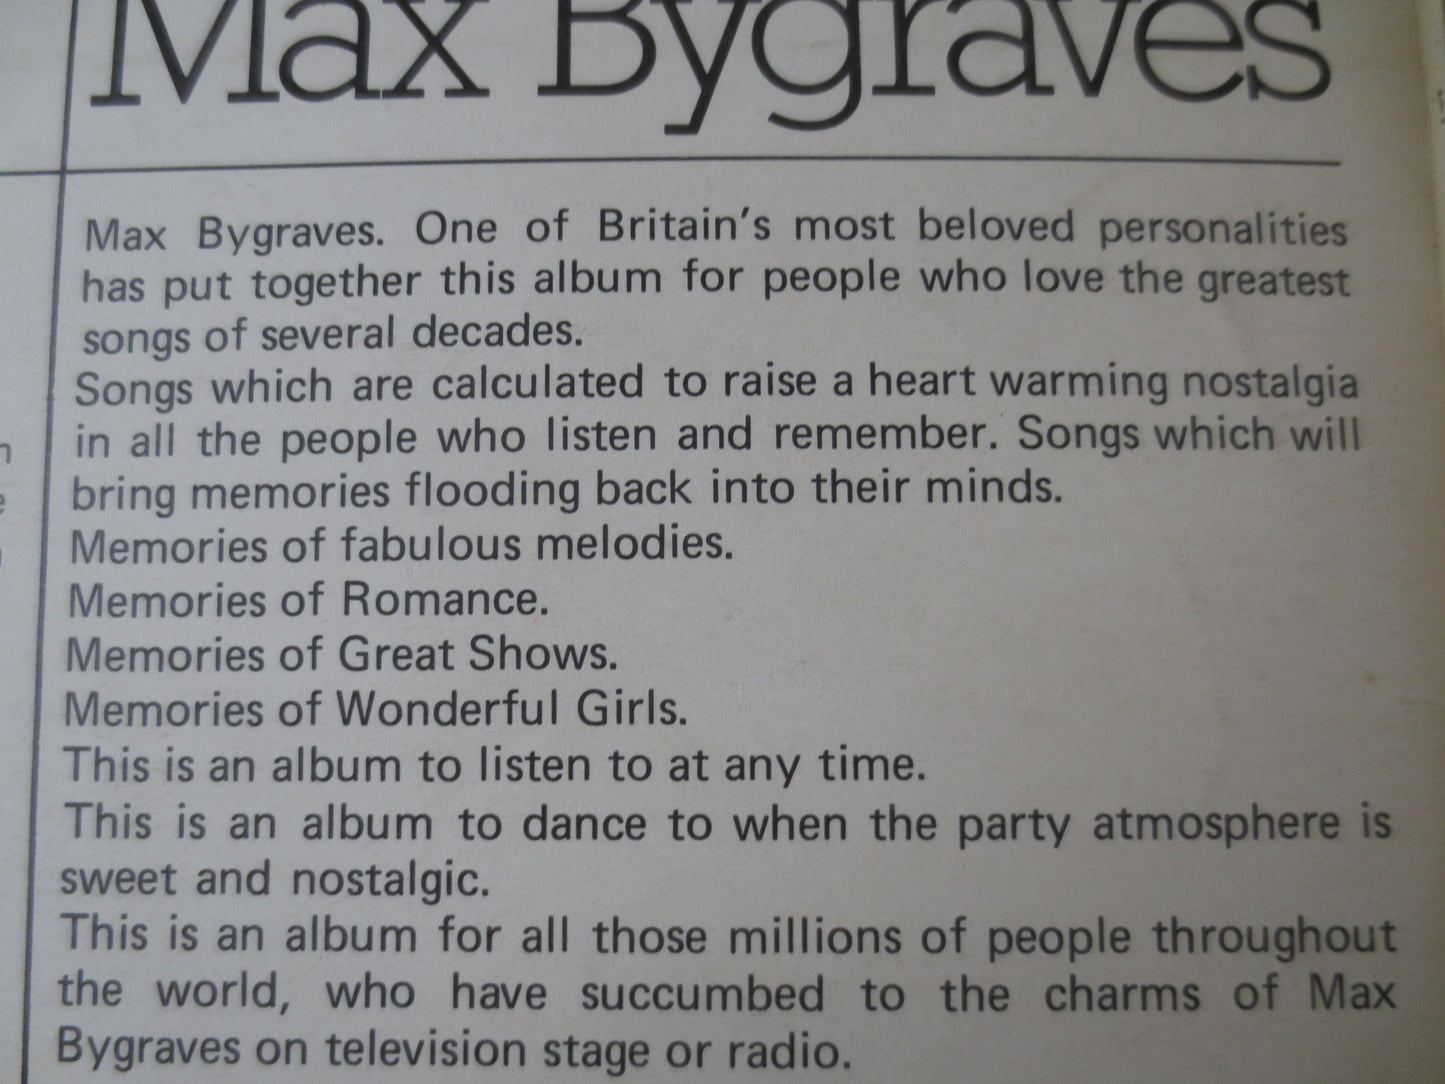 MAX BYGRAVES, SING Along Records, Max Bygraves Records, Max Bygraves Albums, Ragtime Records, Honky Tonk Album, 1971 Record